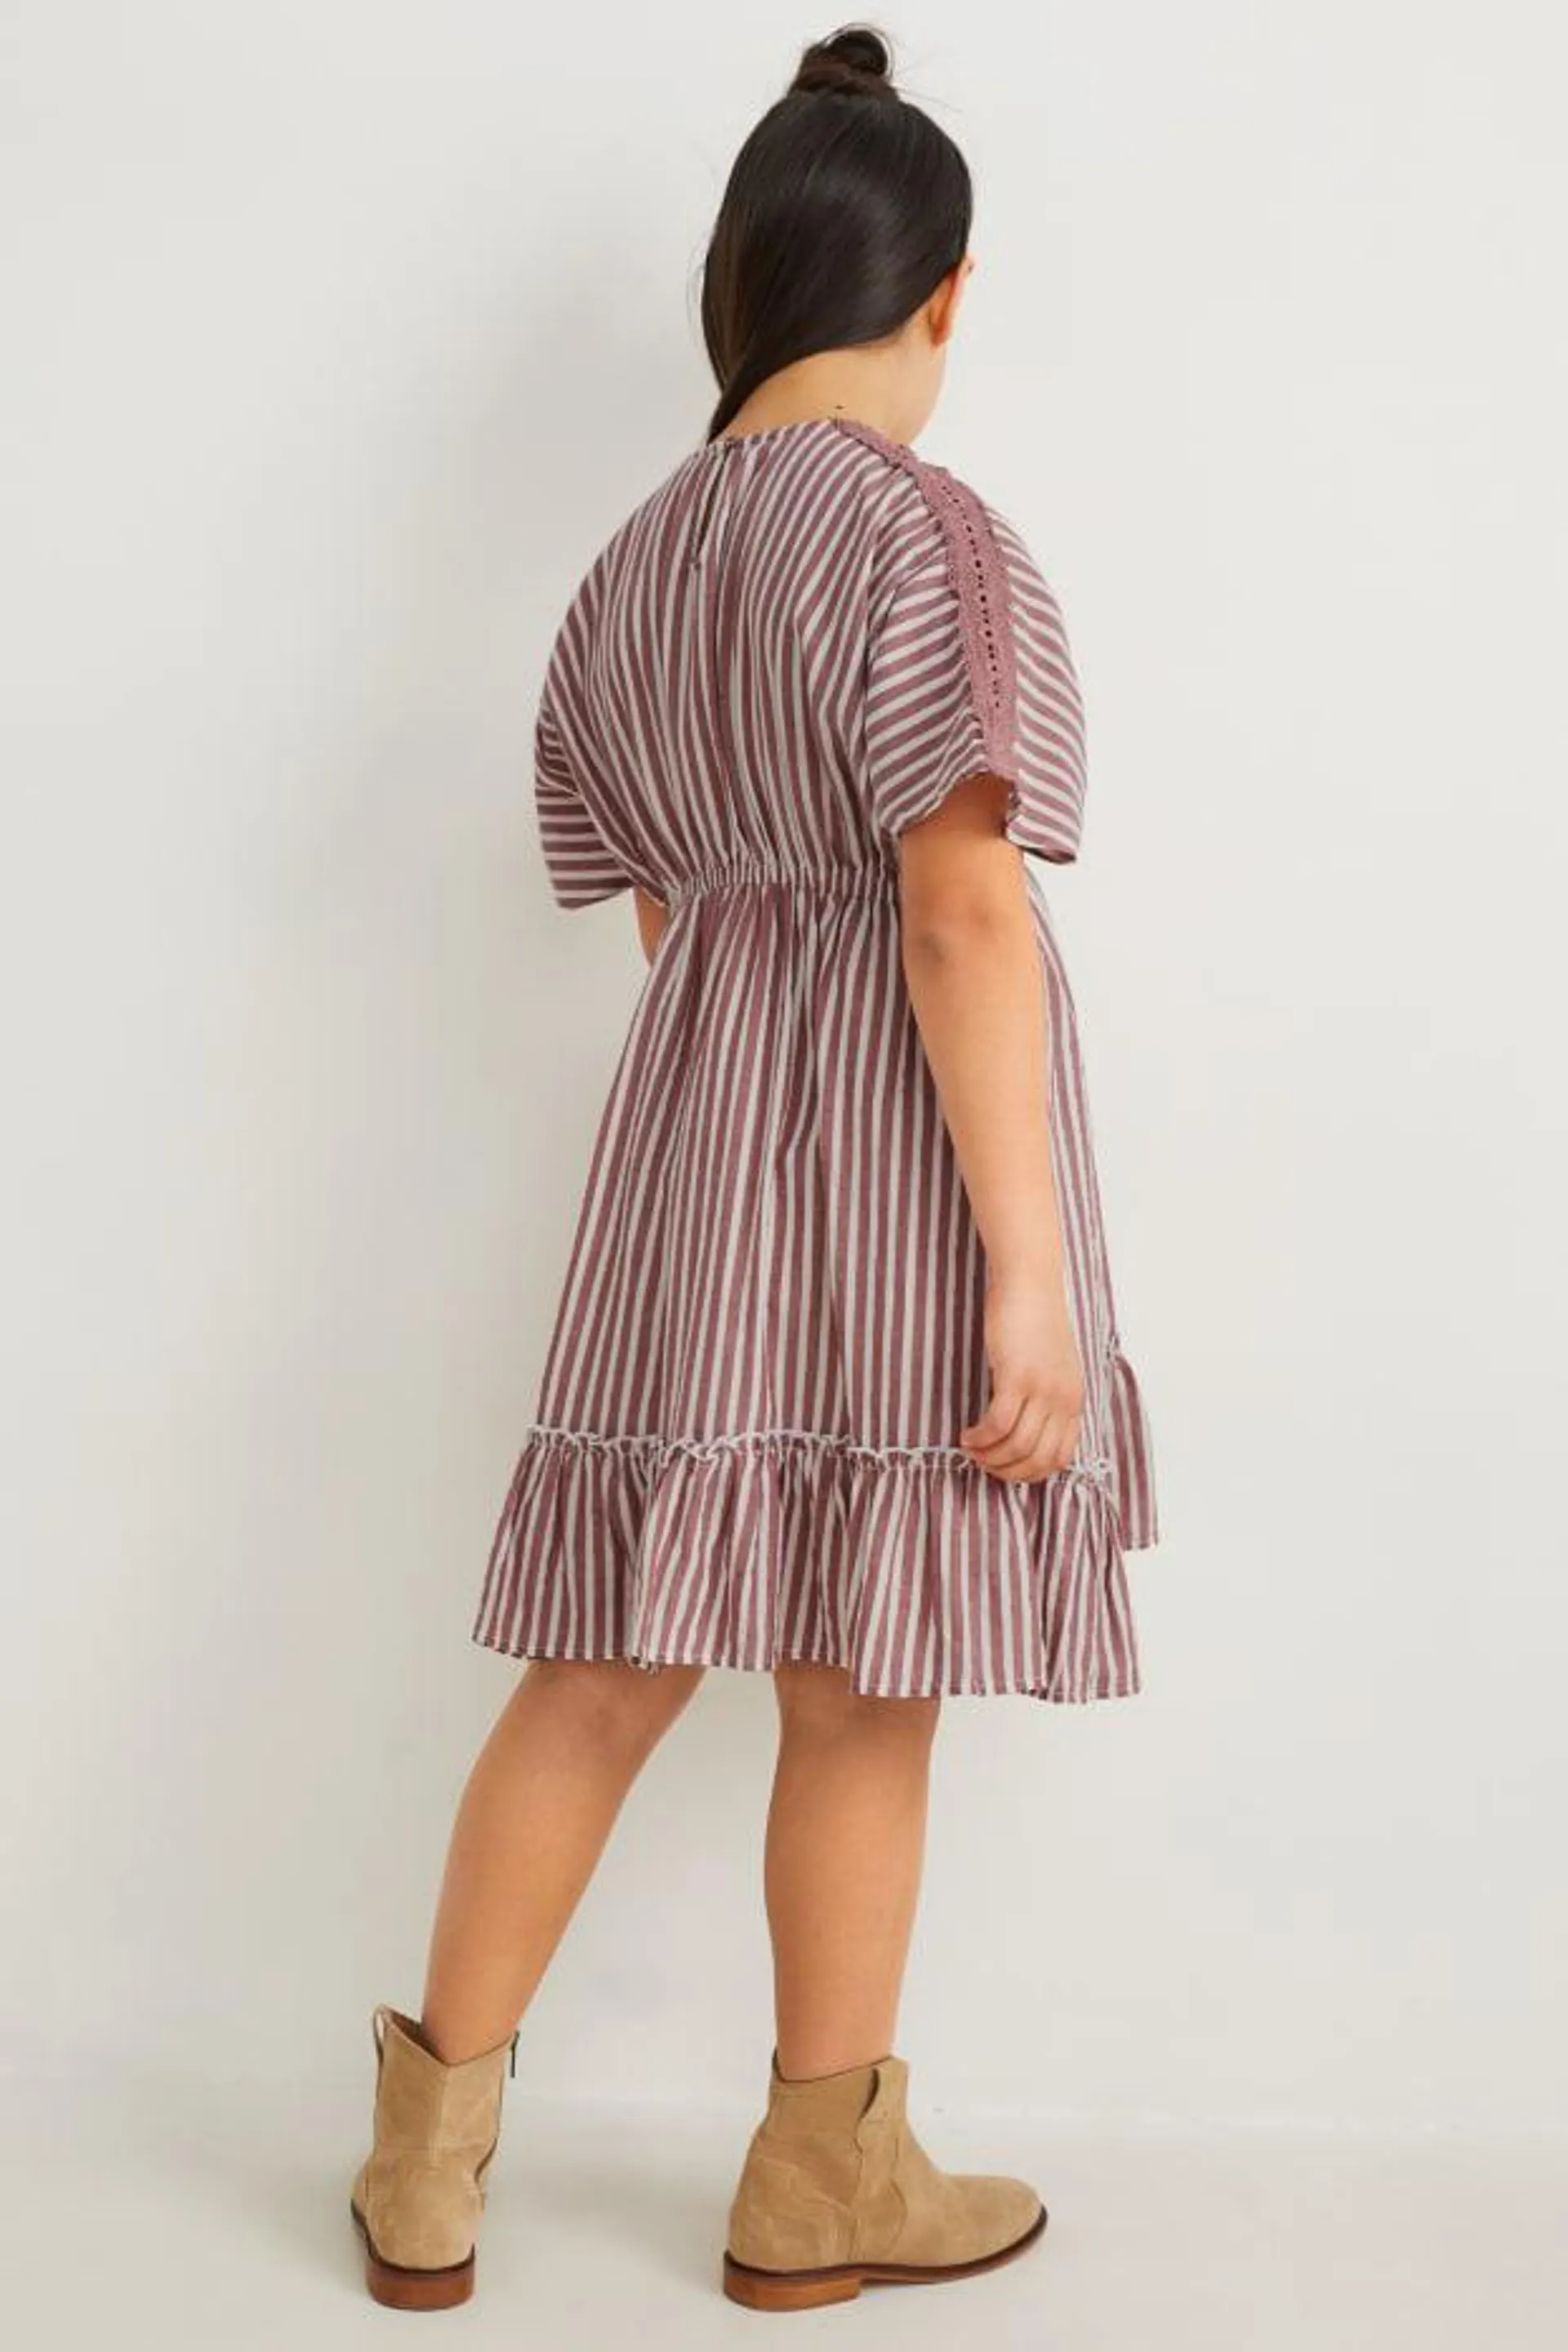 Dress - striped